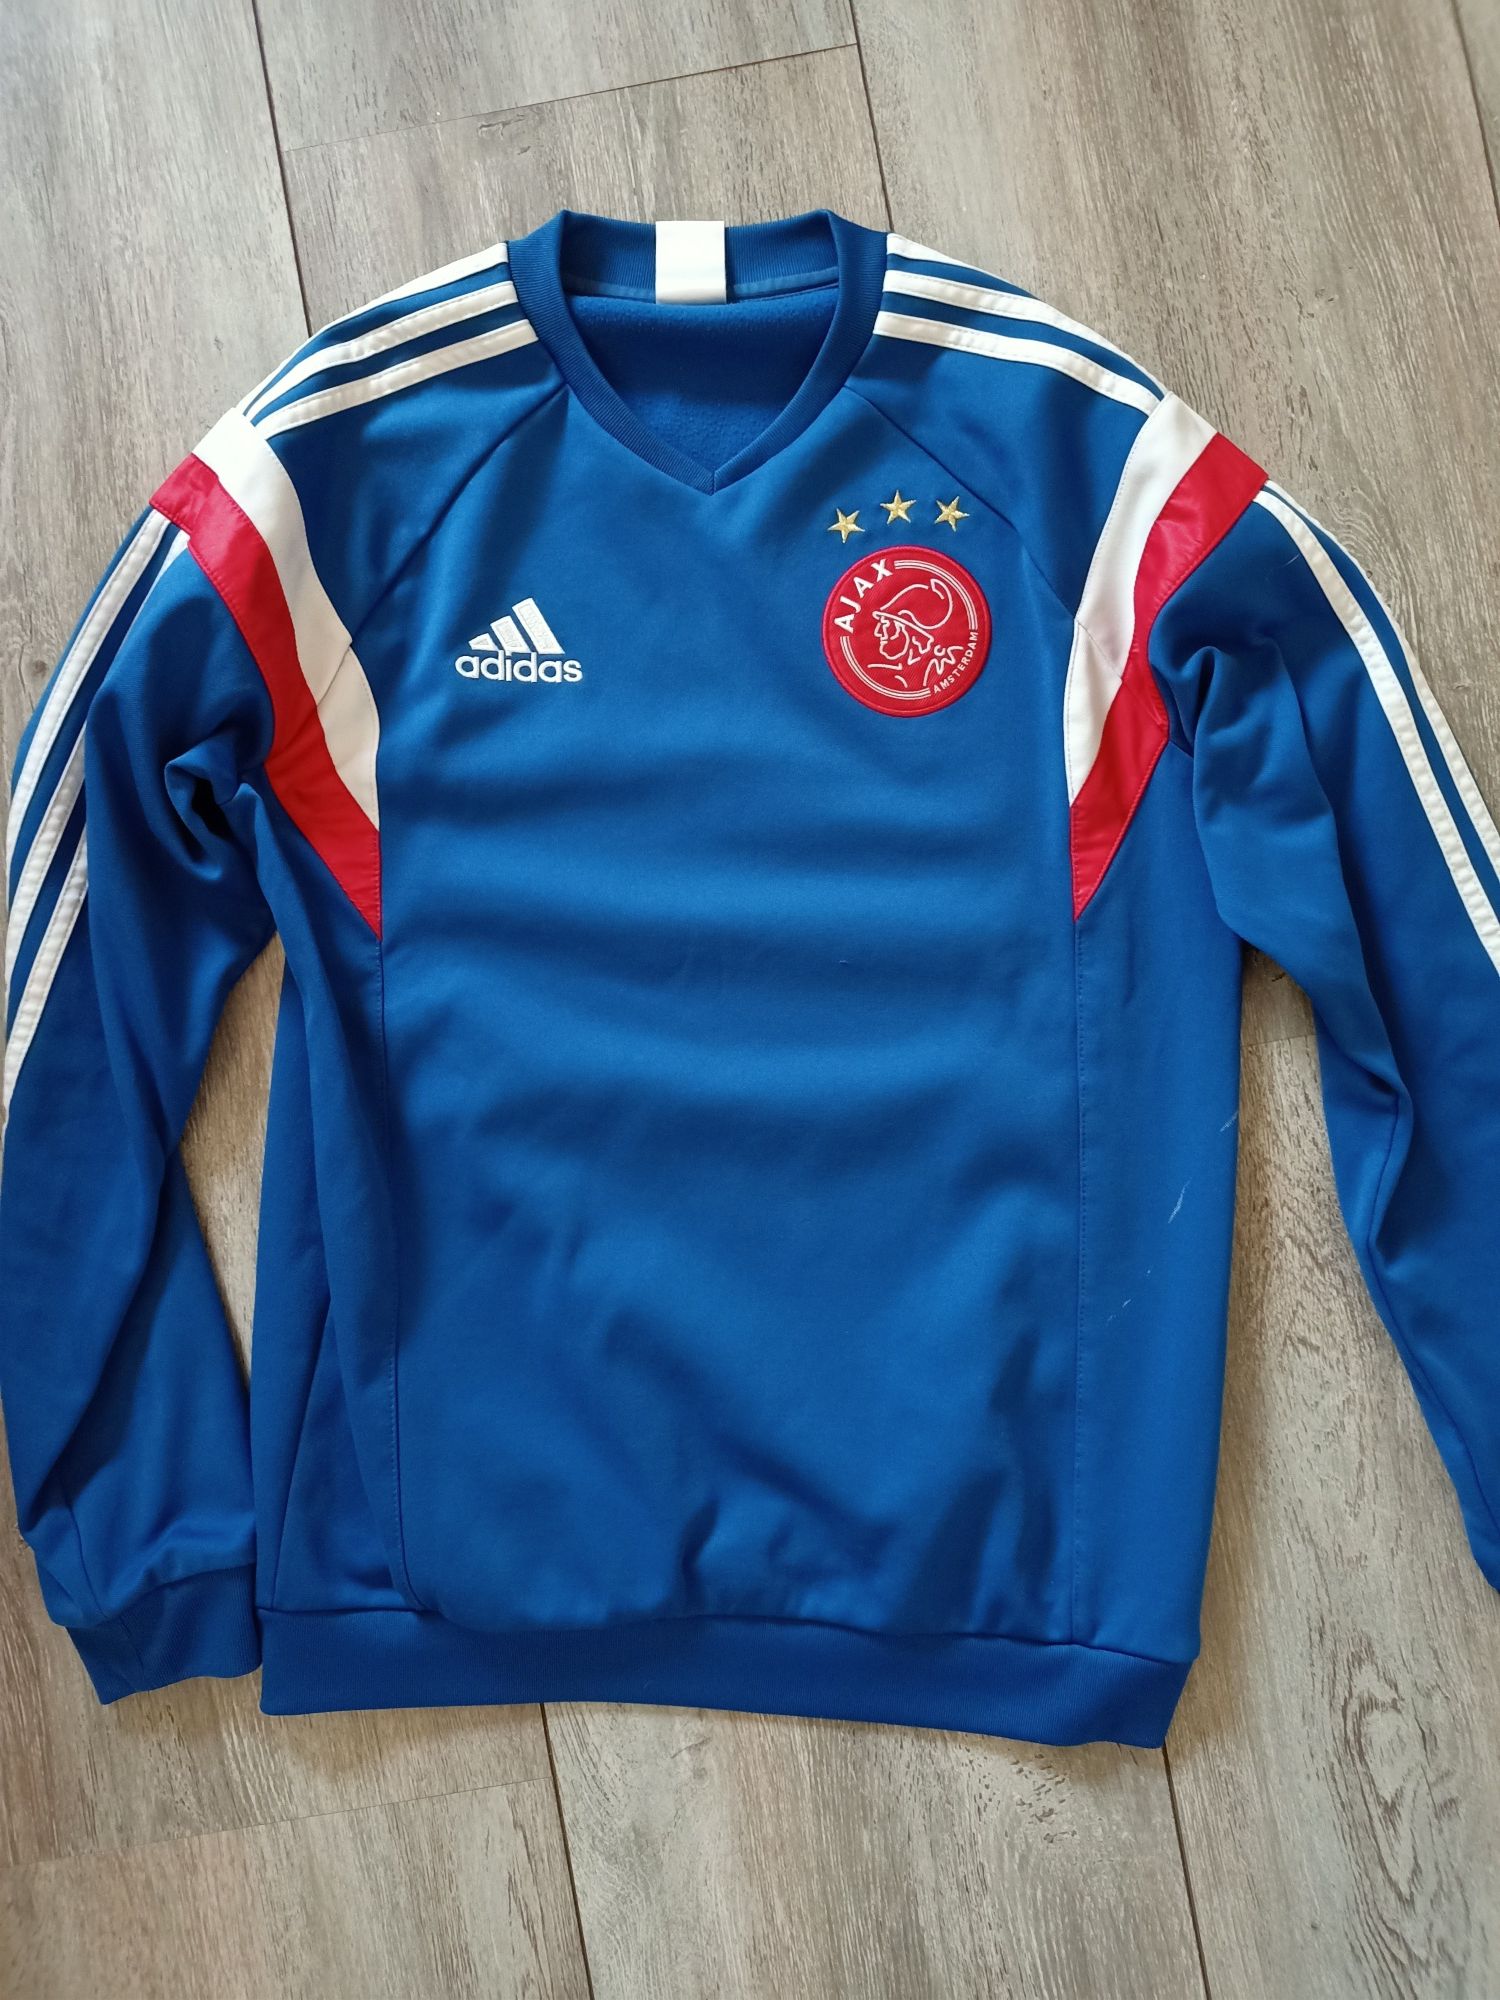 Adidas bluza Ajax Amsterdam